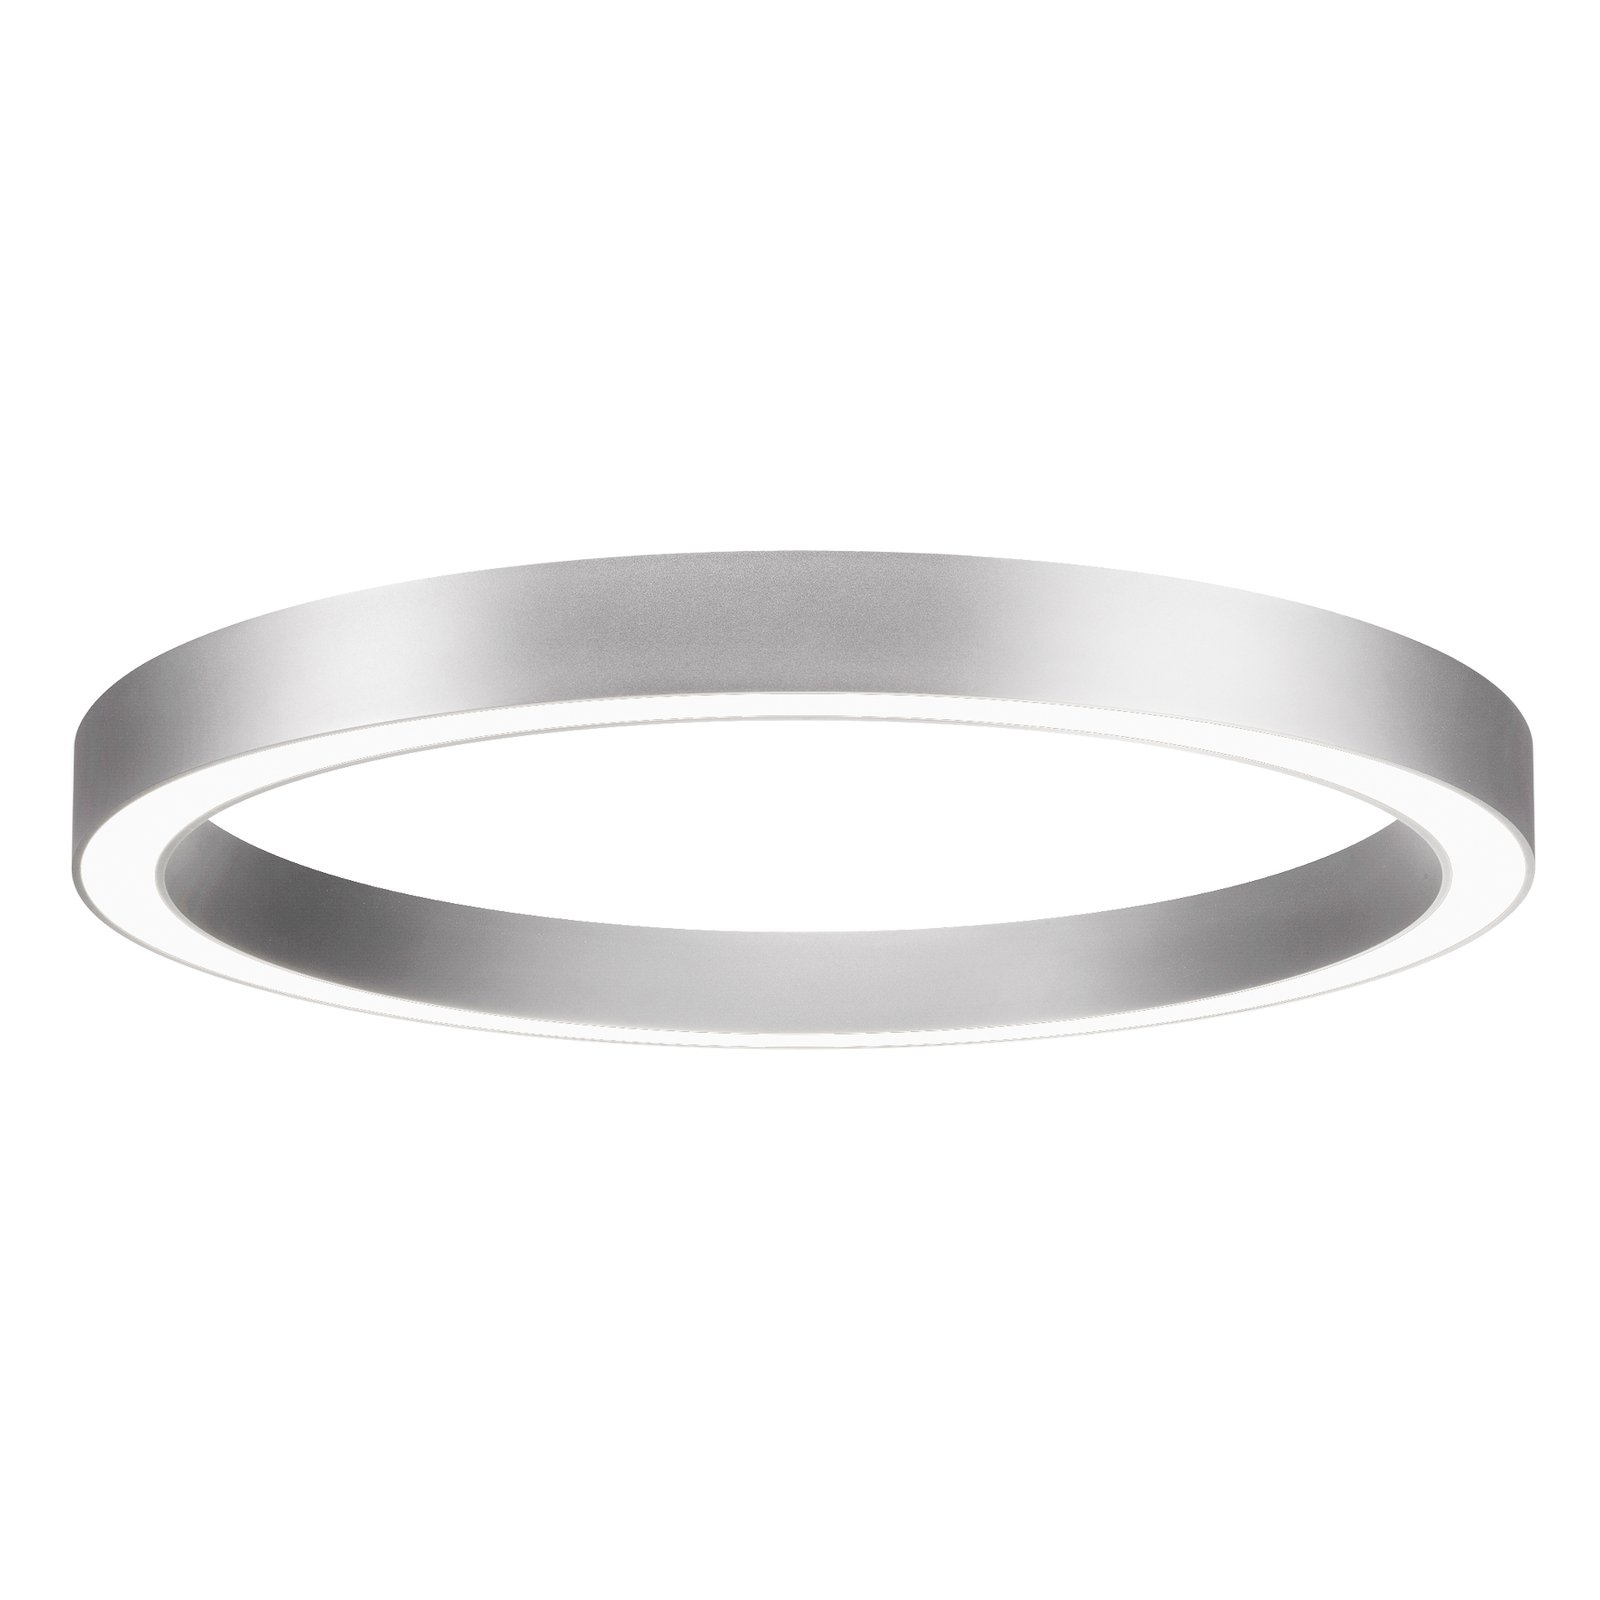 BRUMBERG Biro Circle Ring, Ø 45cm, on/off, silver, 3,000 K